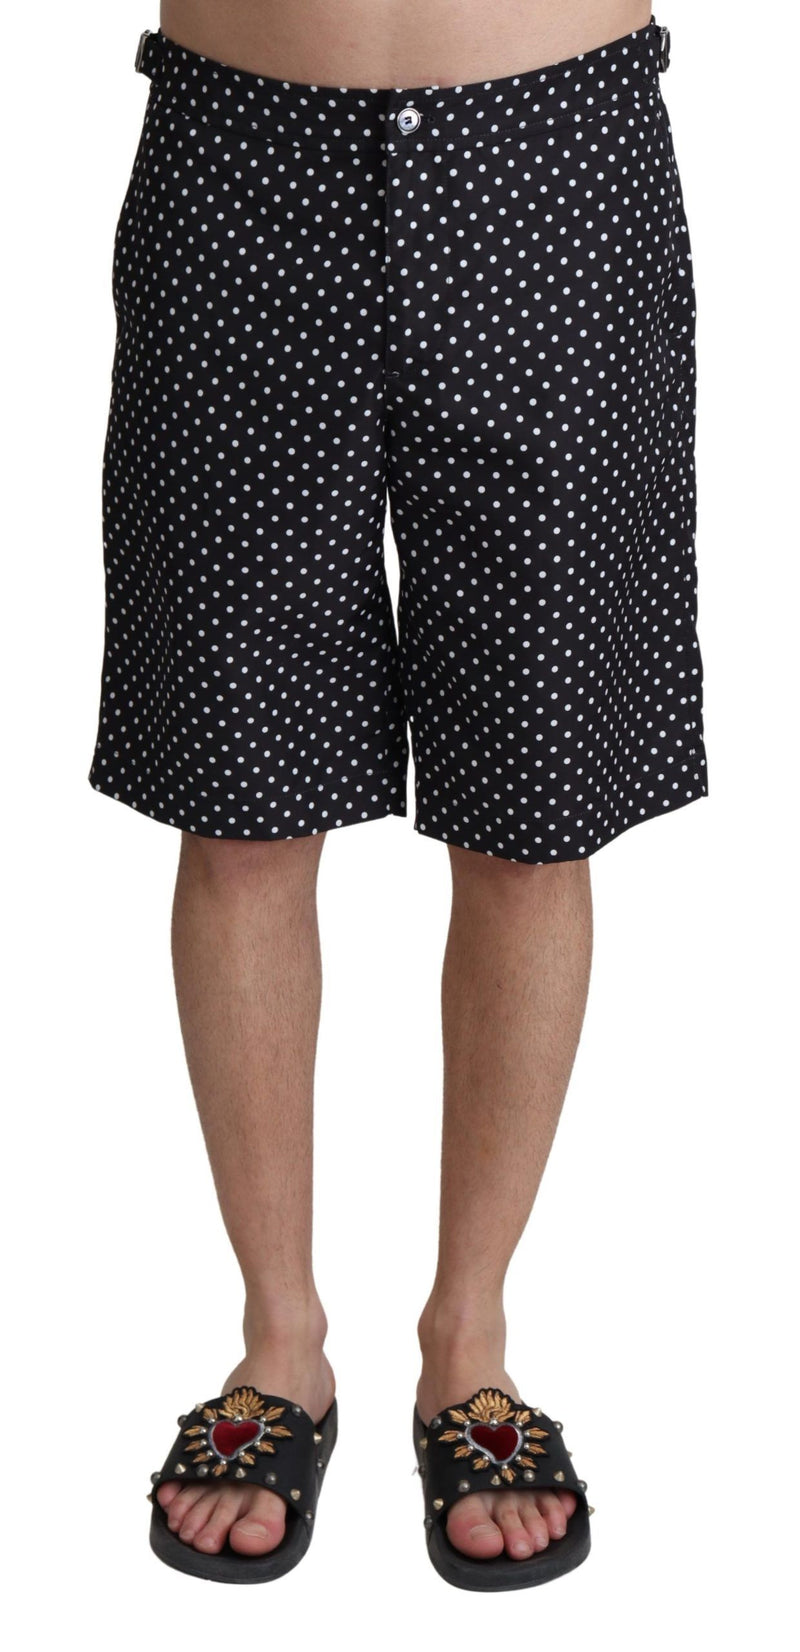 Black Polka Dots Beachwear Shorts Swimwear